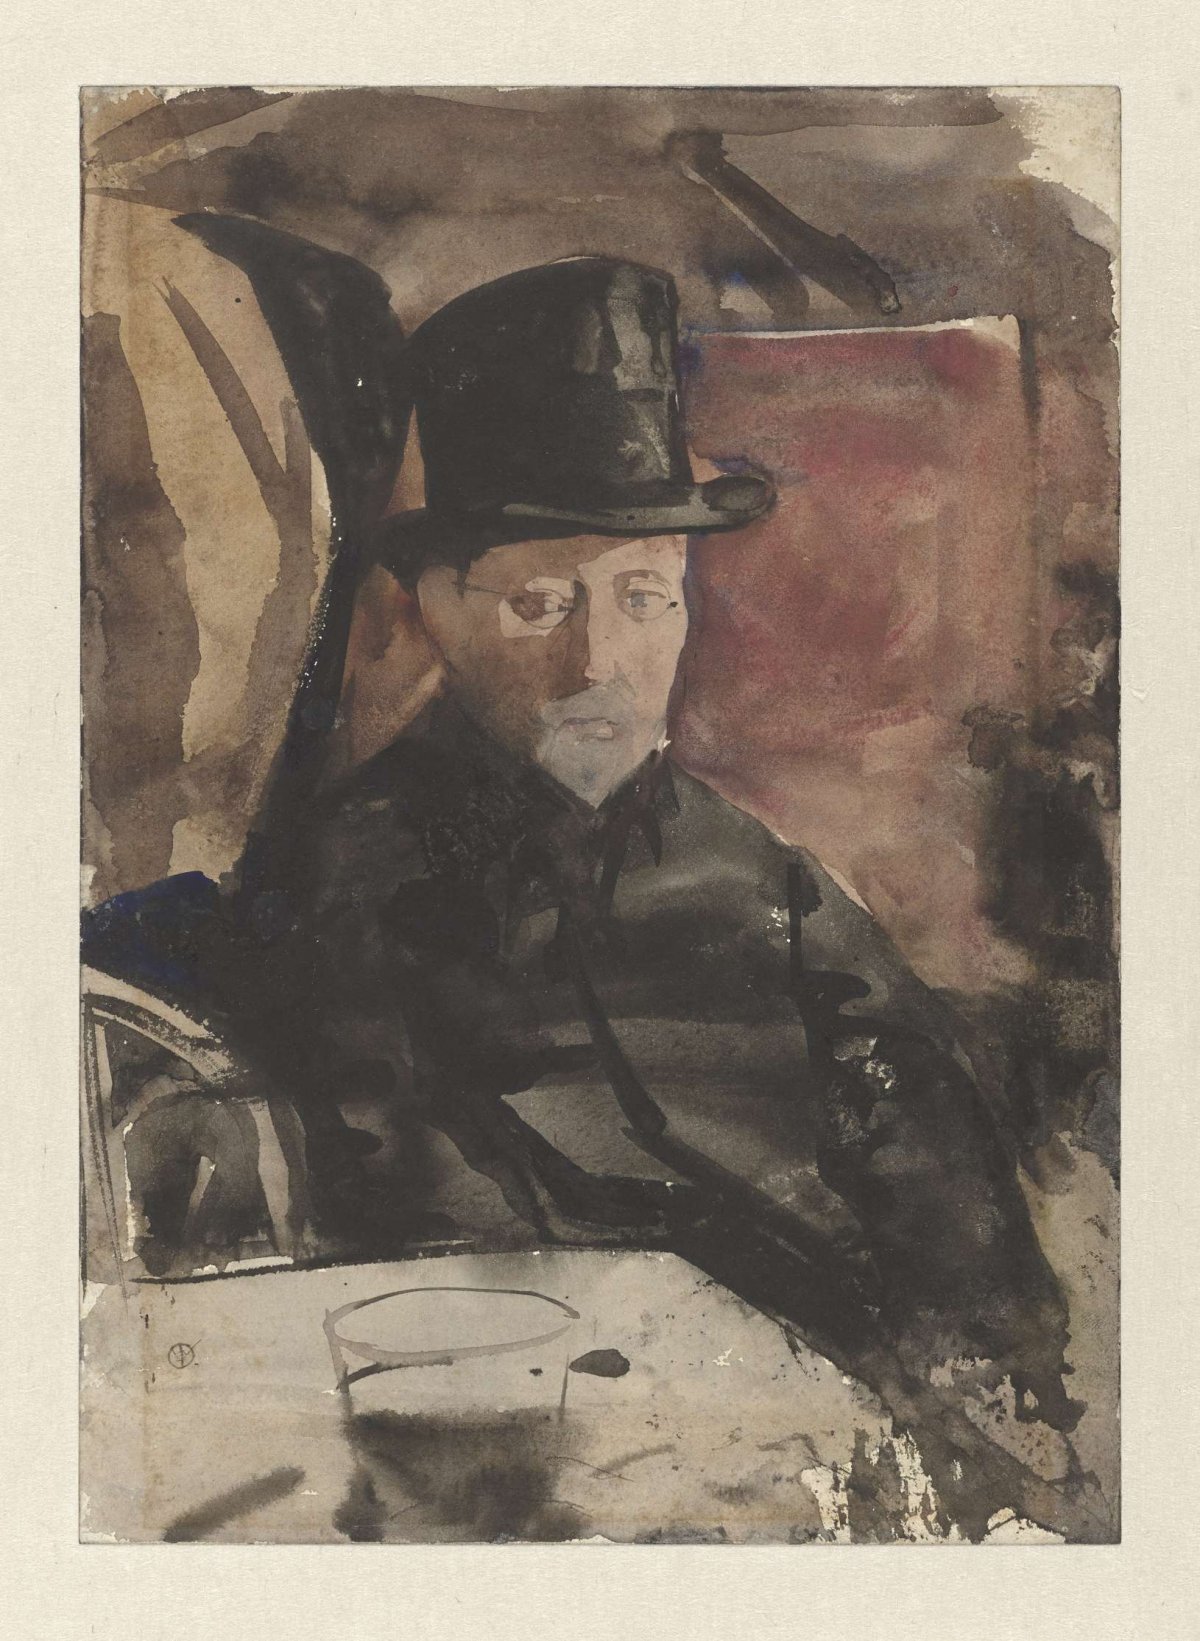 Seated man with top hat in a cafe, Gerrit Willem Dijsselhof, c. 1876 - c. 1924